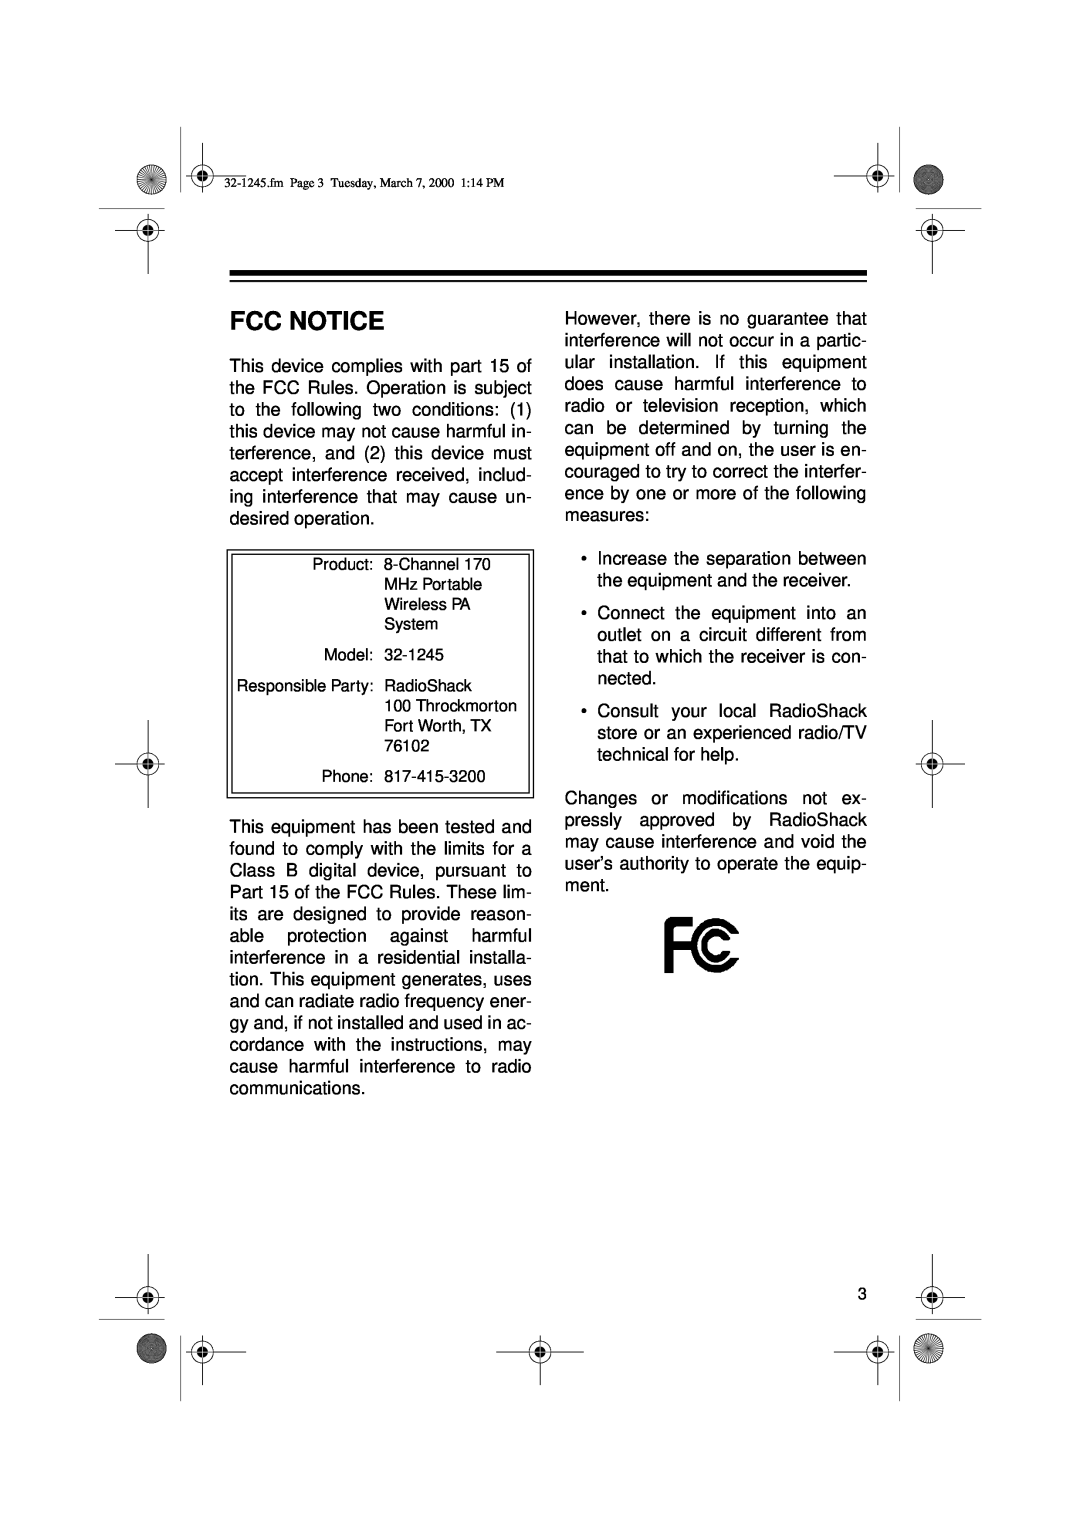 Ricoh 32-1245 owner manual Fcc Notice 